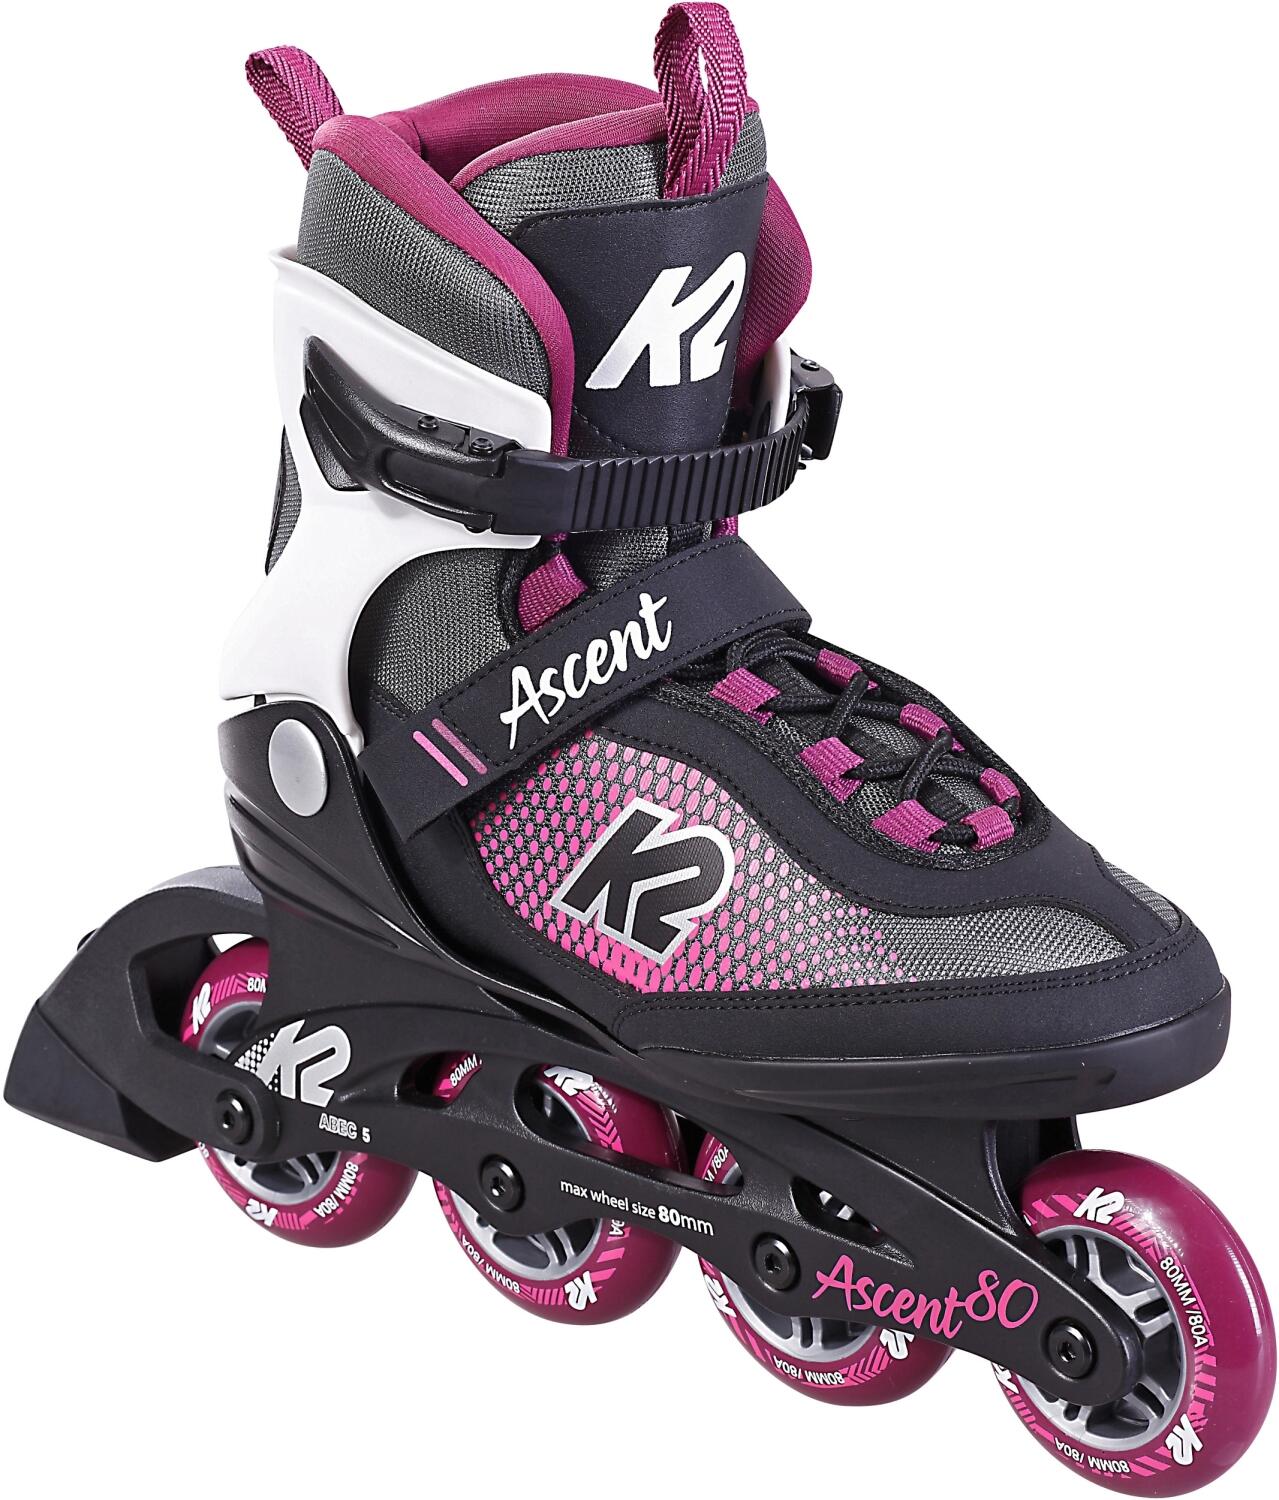 K2 Ascent 80 Inlineskate Damen (39.0 (US=8.0), design) von K2 Skates